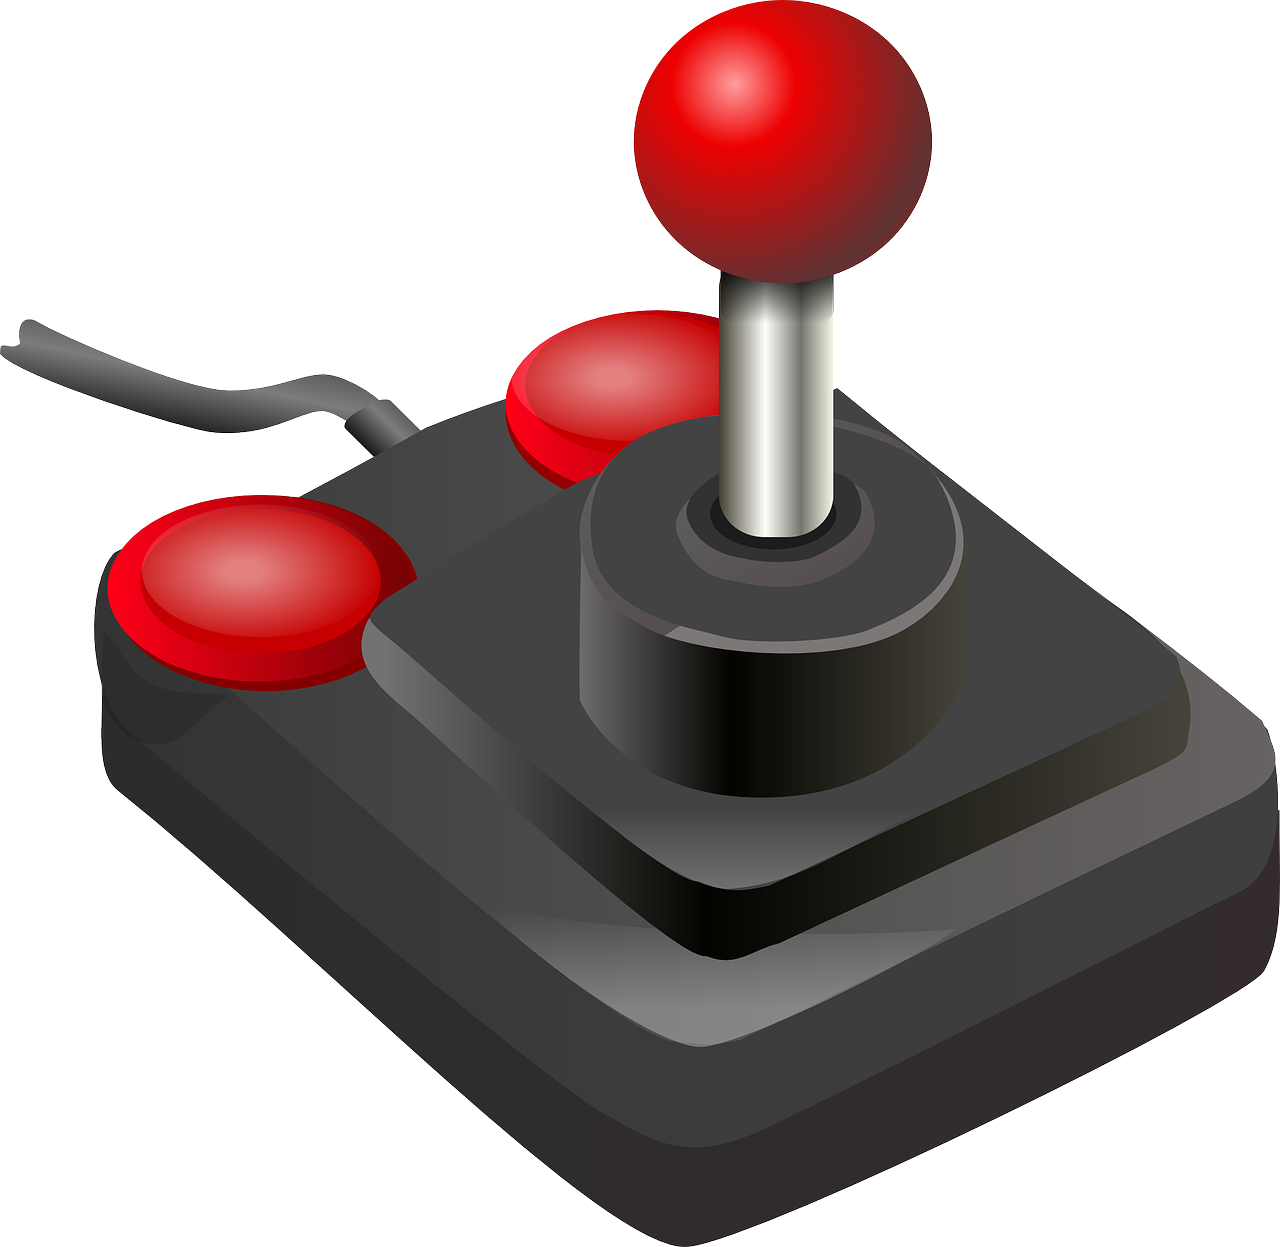 Image of a joystick